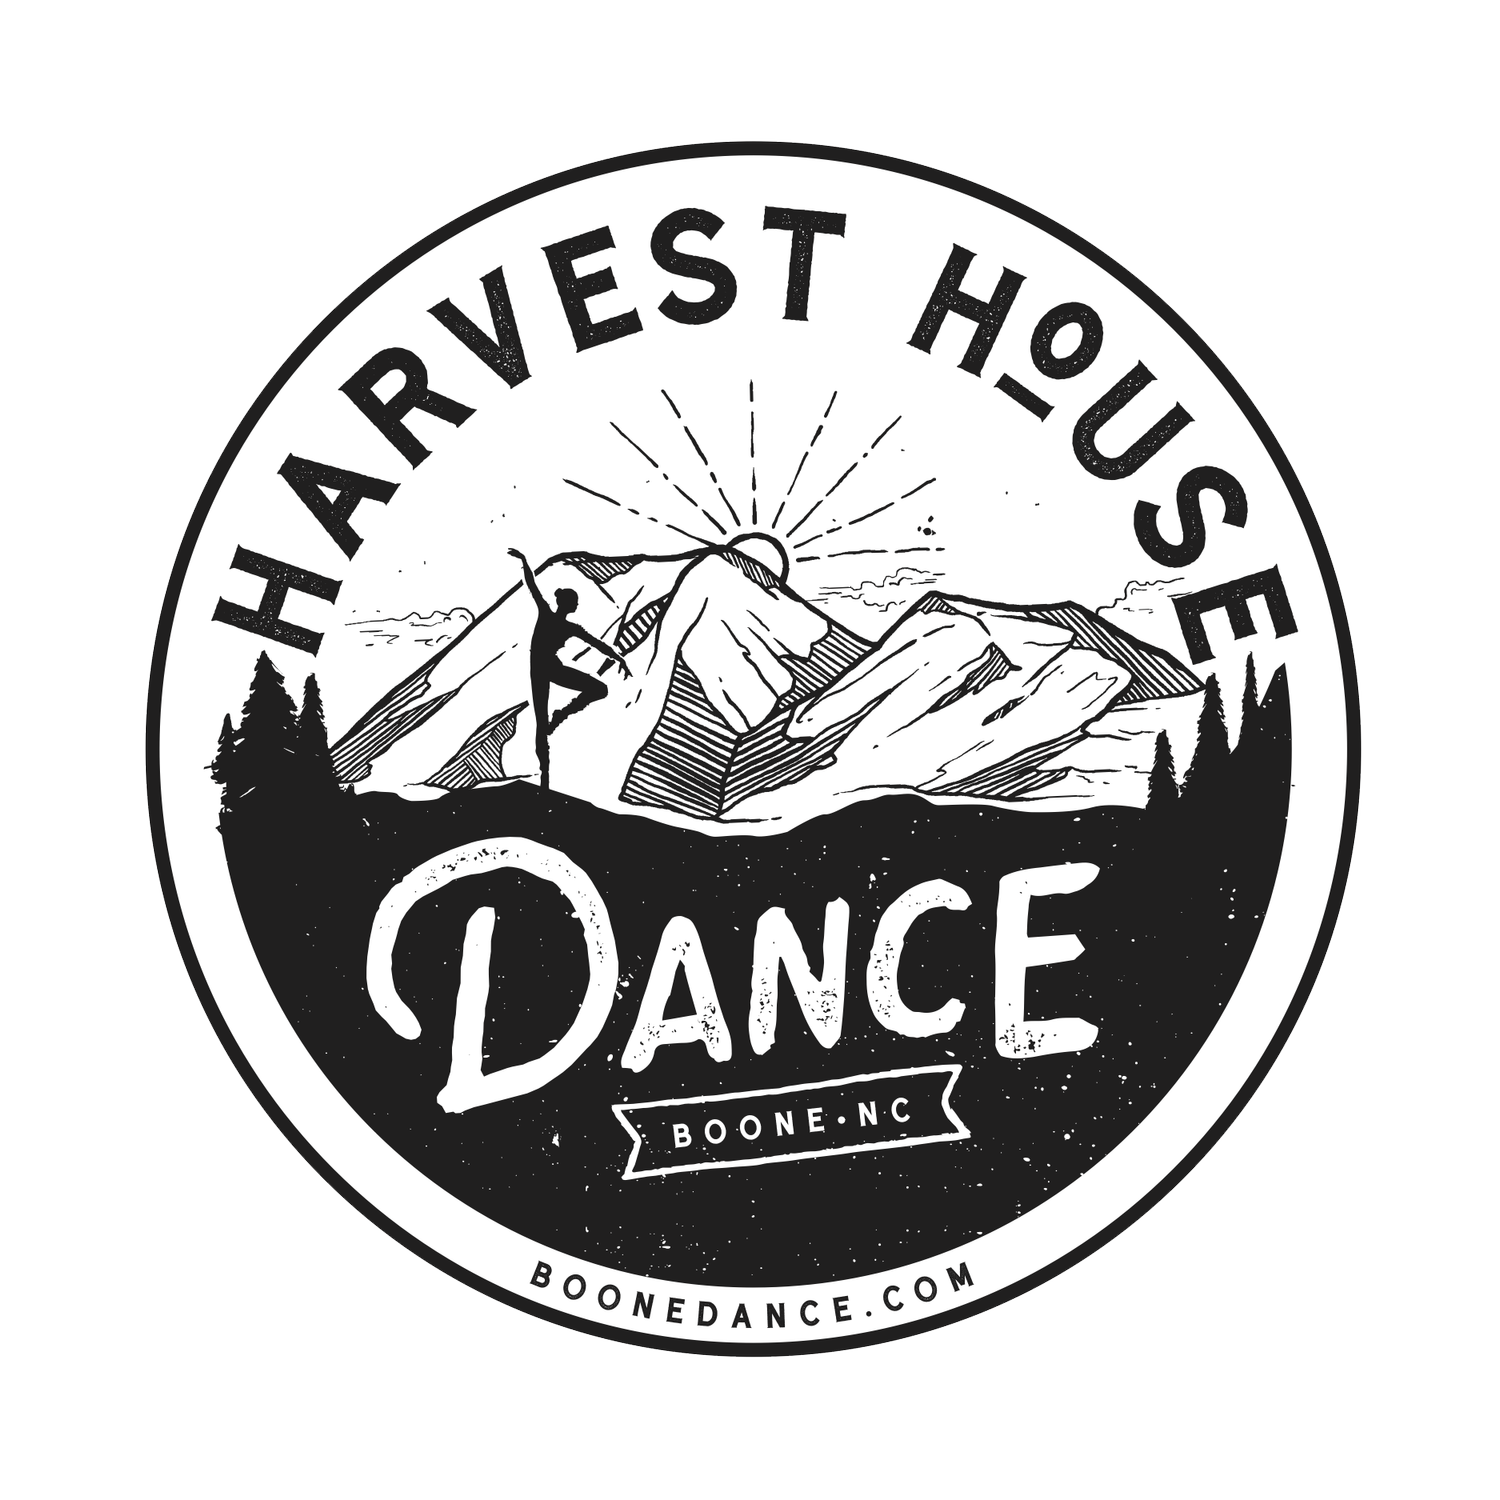 Harvest House Dance Studio